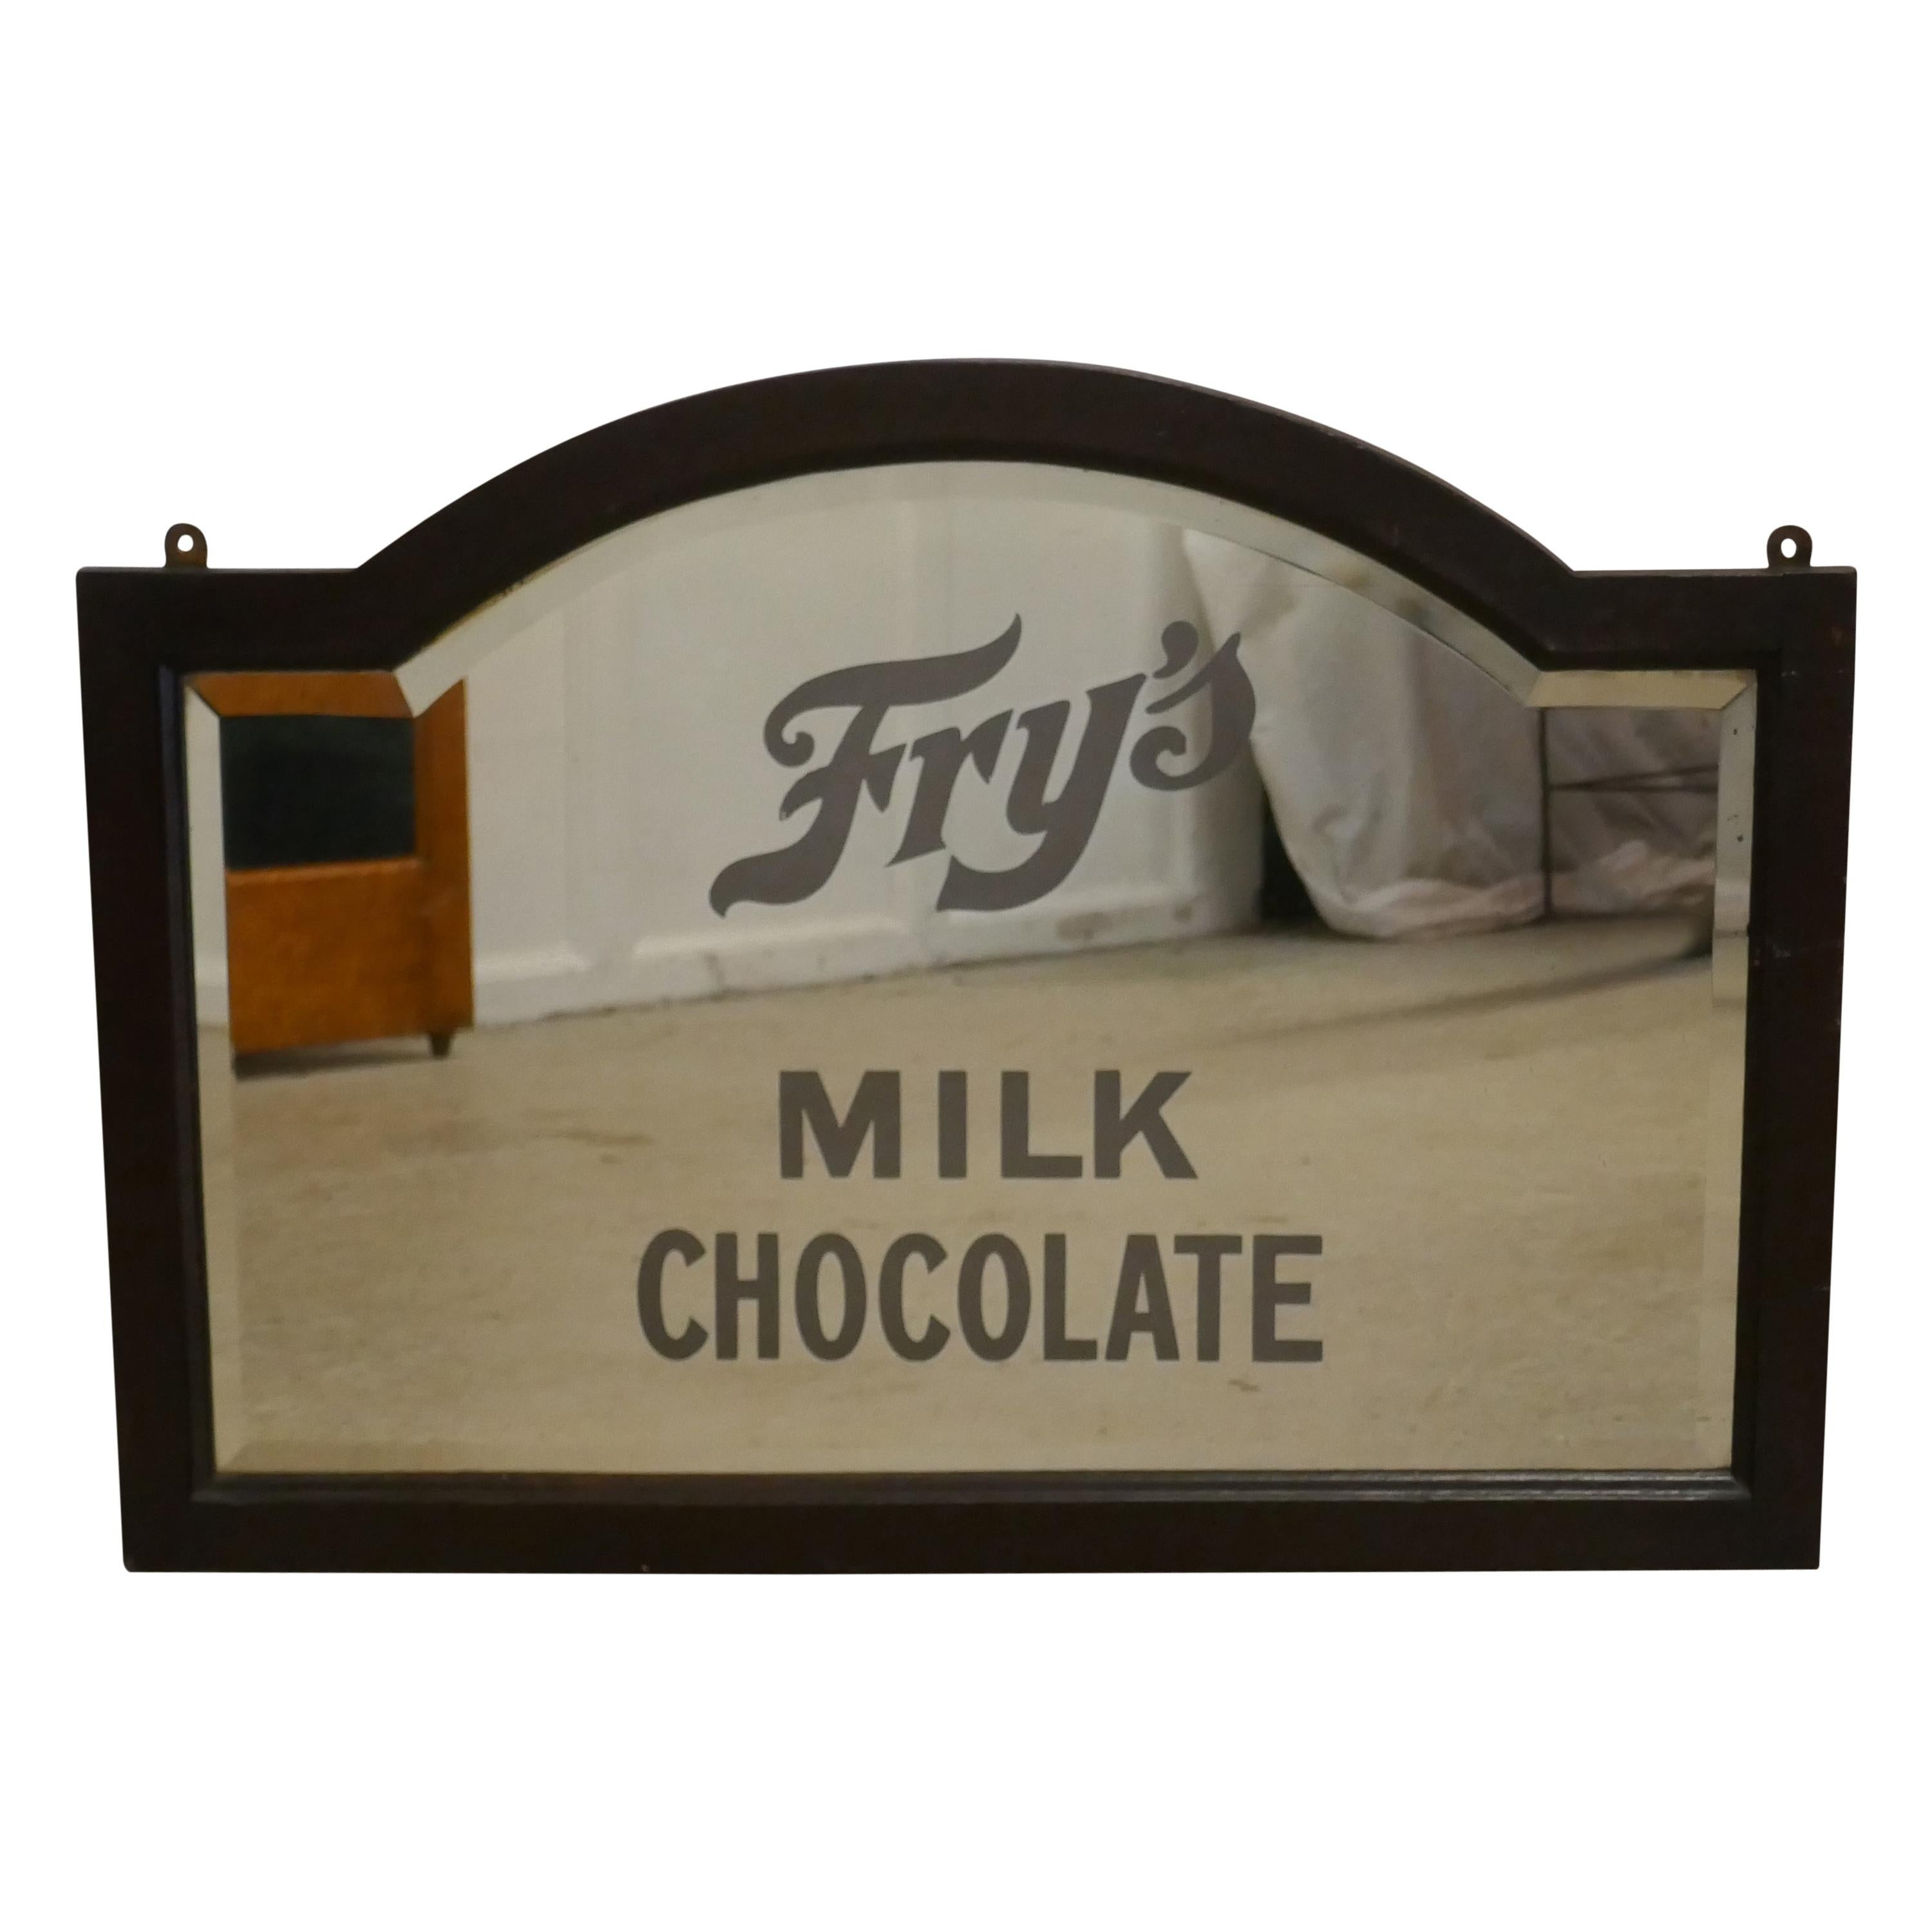 Edwardian Fry’s Chocolate Advertising Mirror